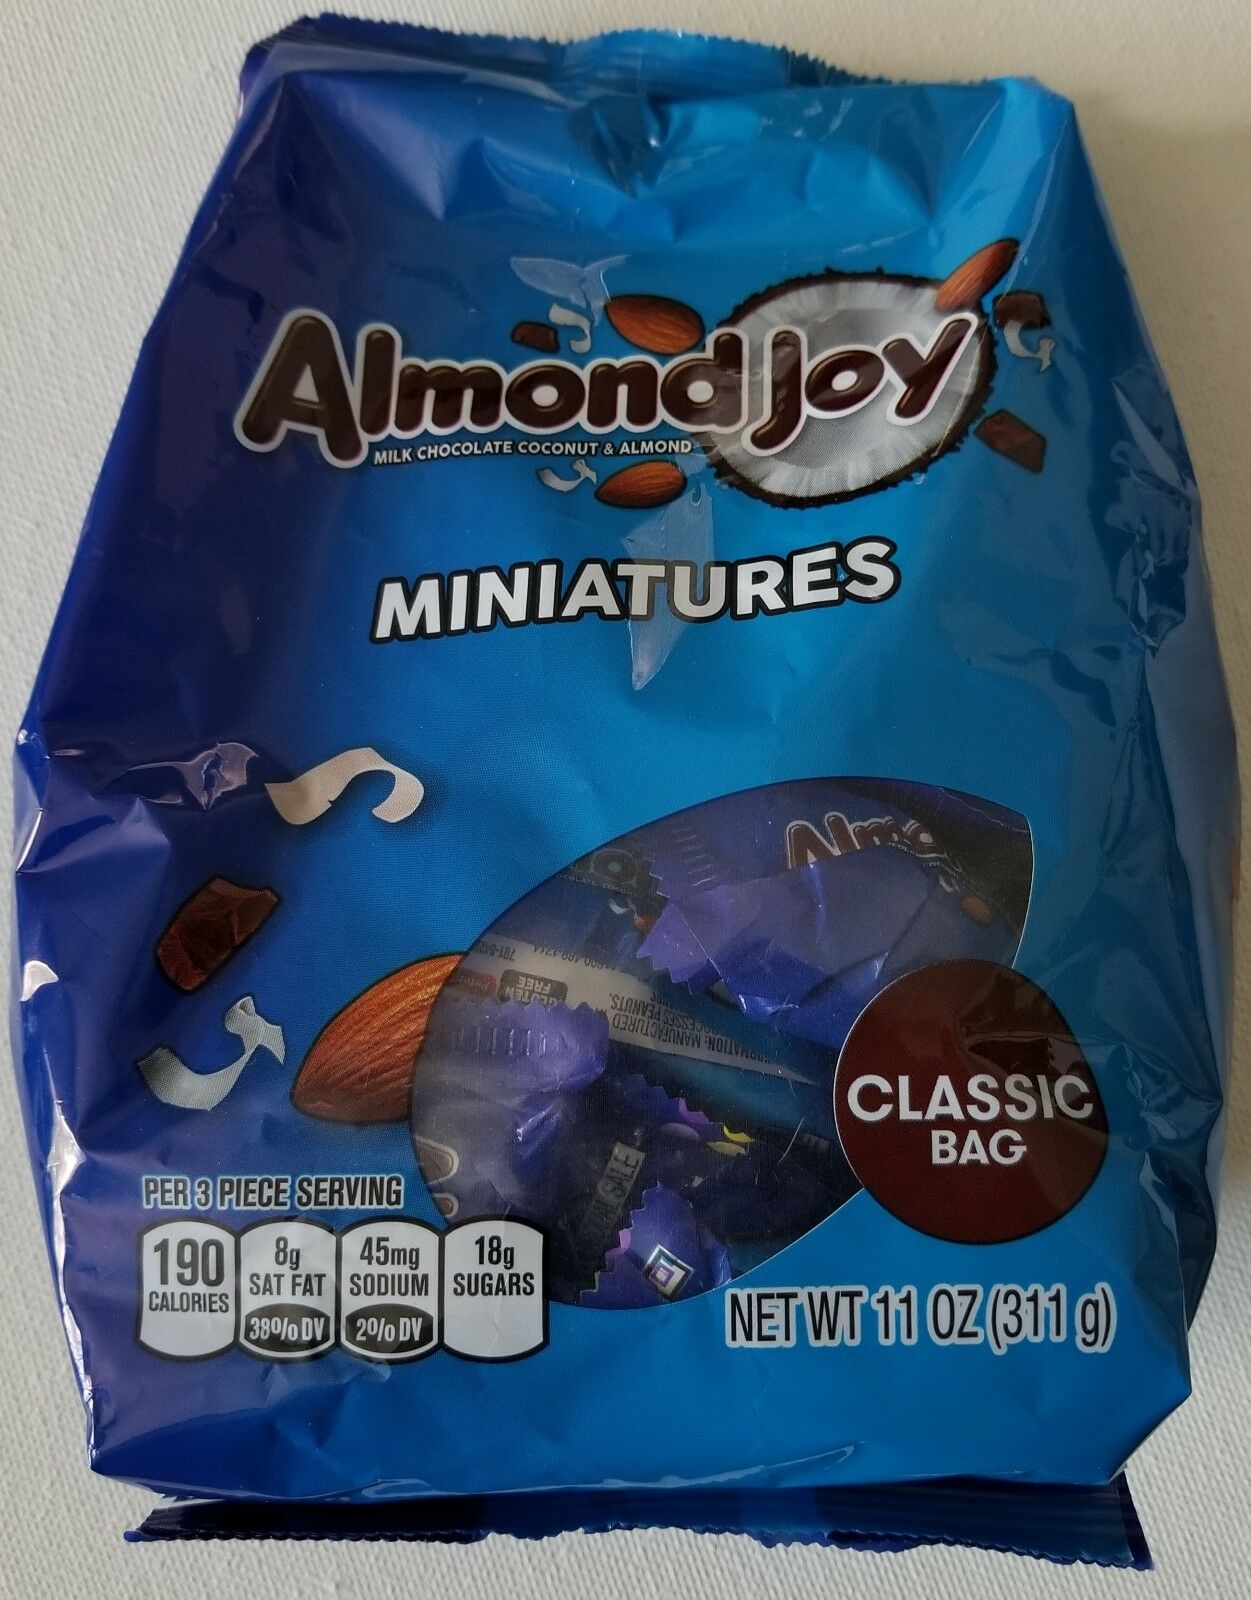 New Almond Joy Miniatures Coconut Almond Chocolate Candies Free World Shipping